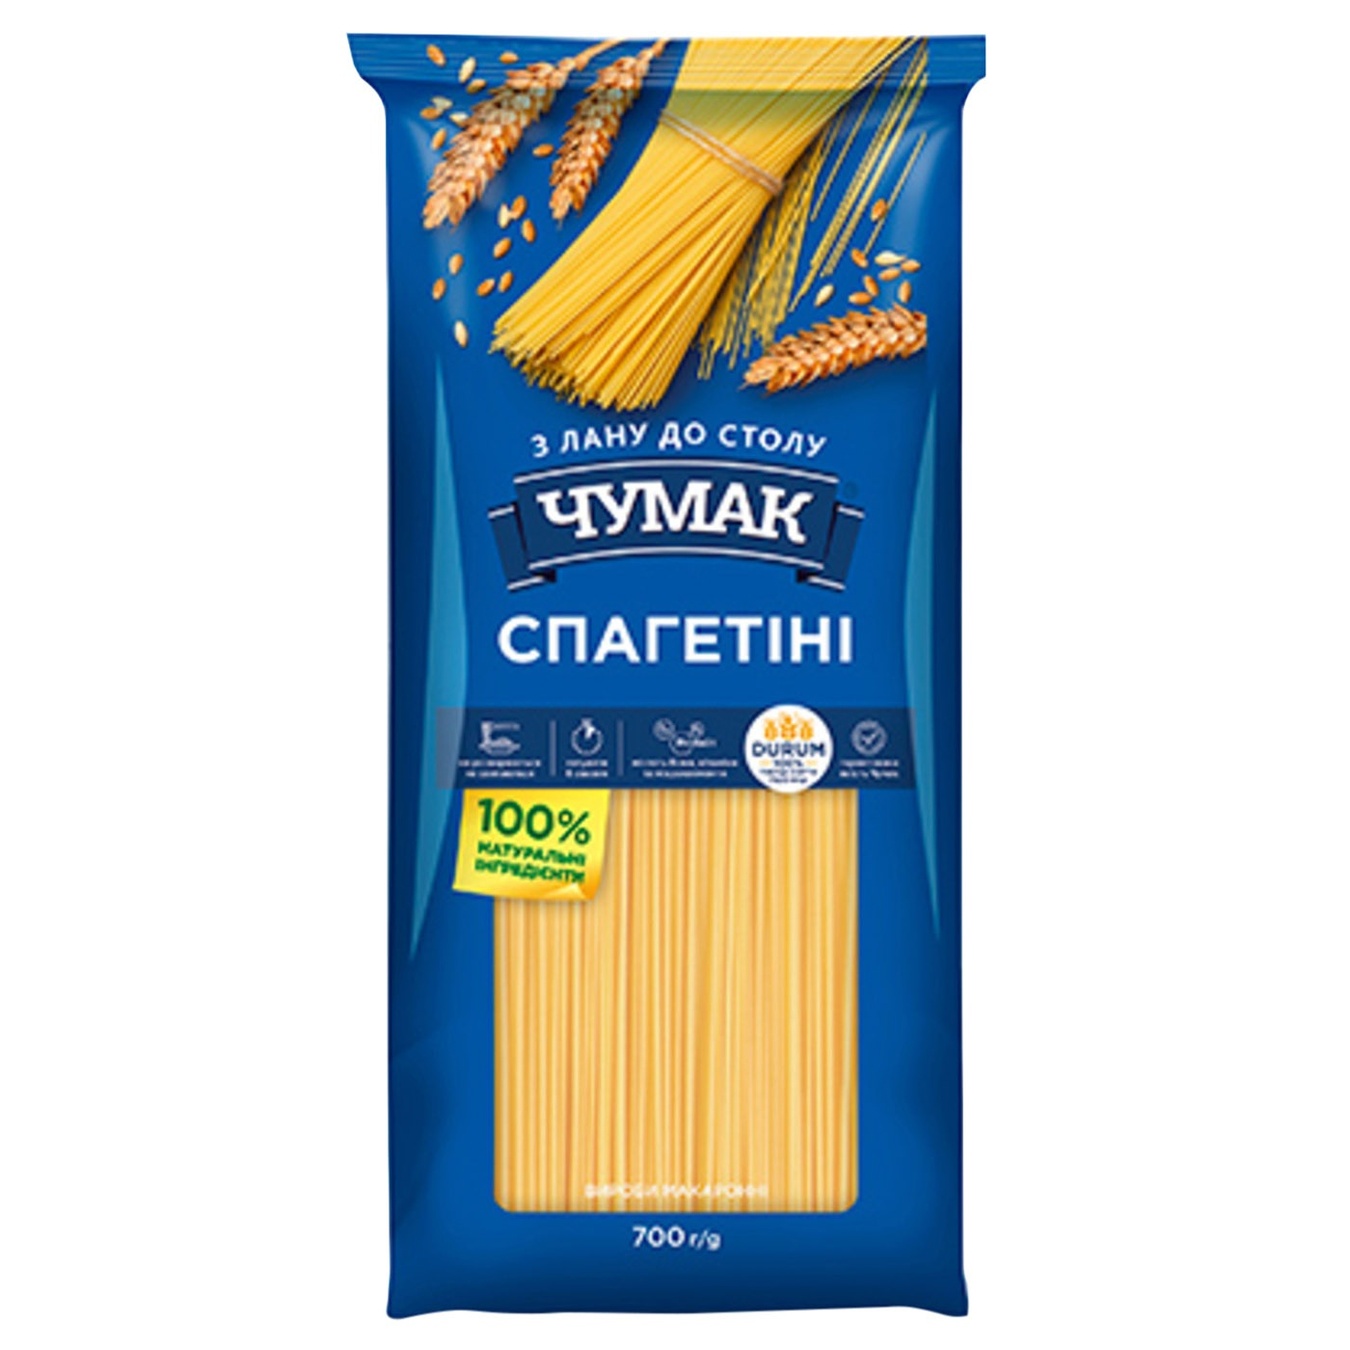 Macaroni Chumak spaghetti 700g